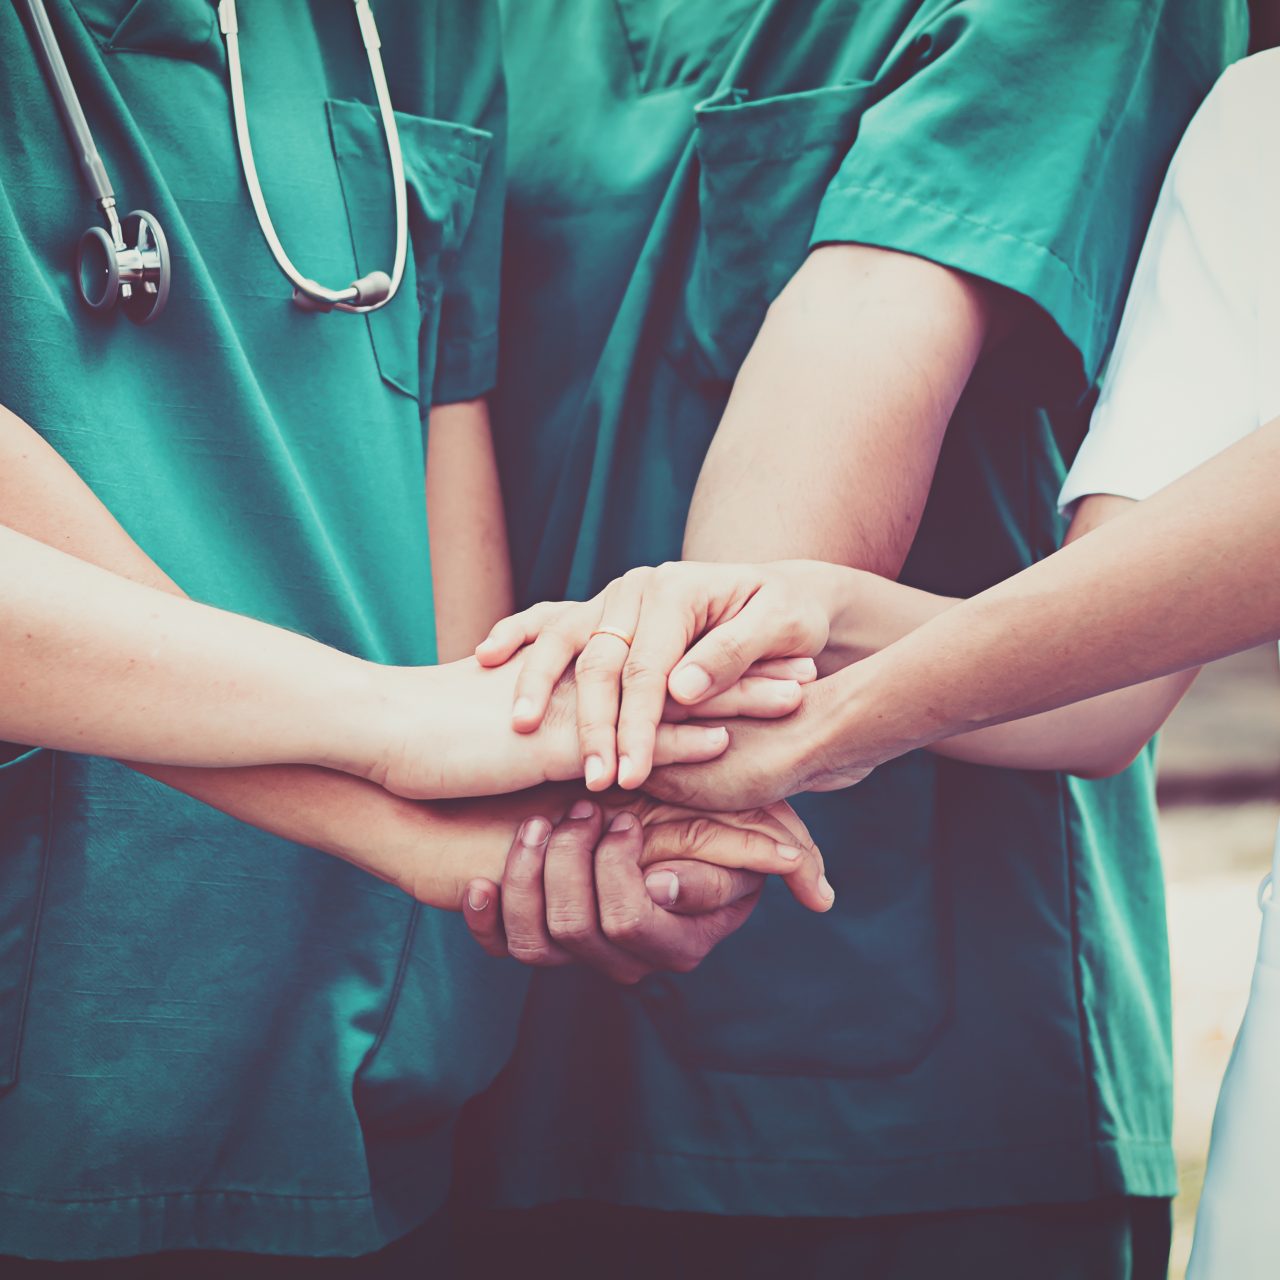 Pandemic work brings a Dubai nurse global recognition